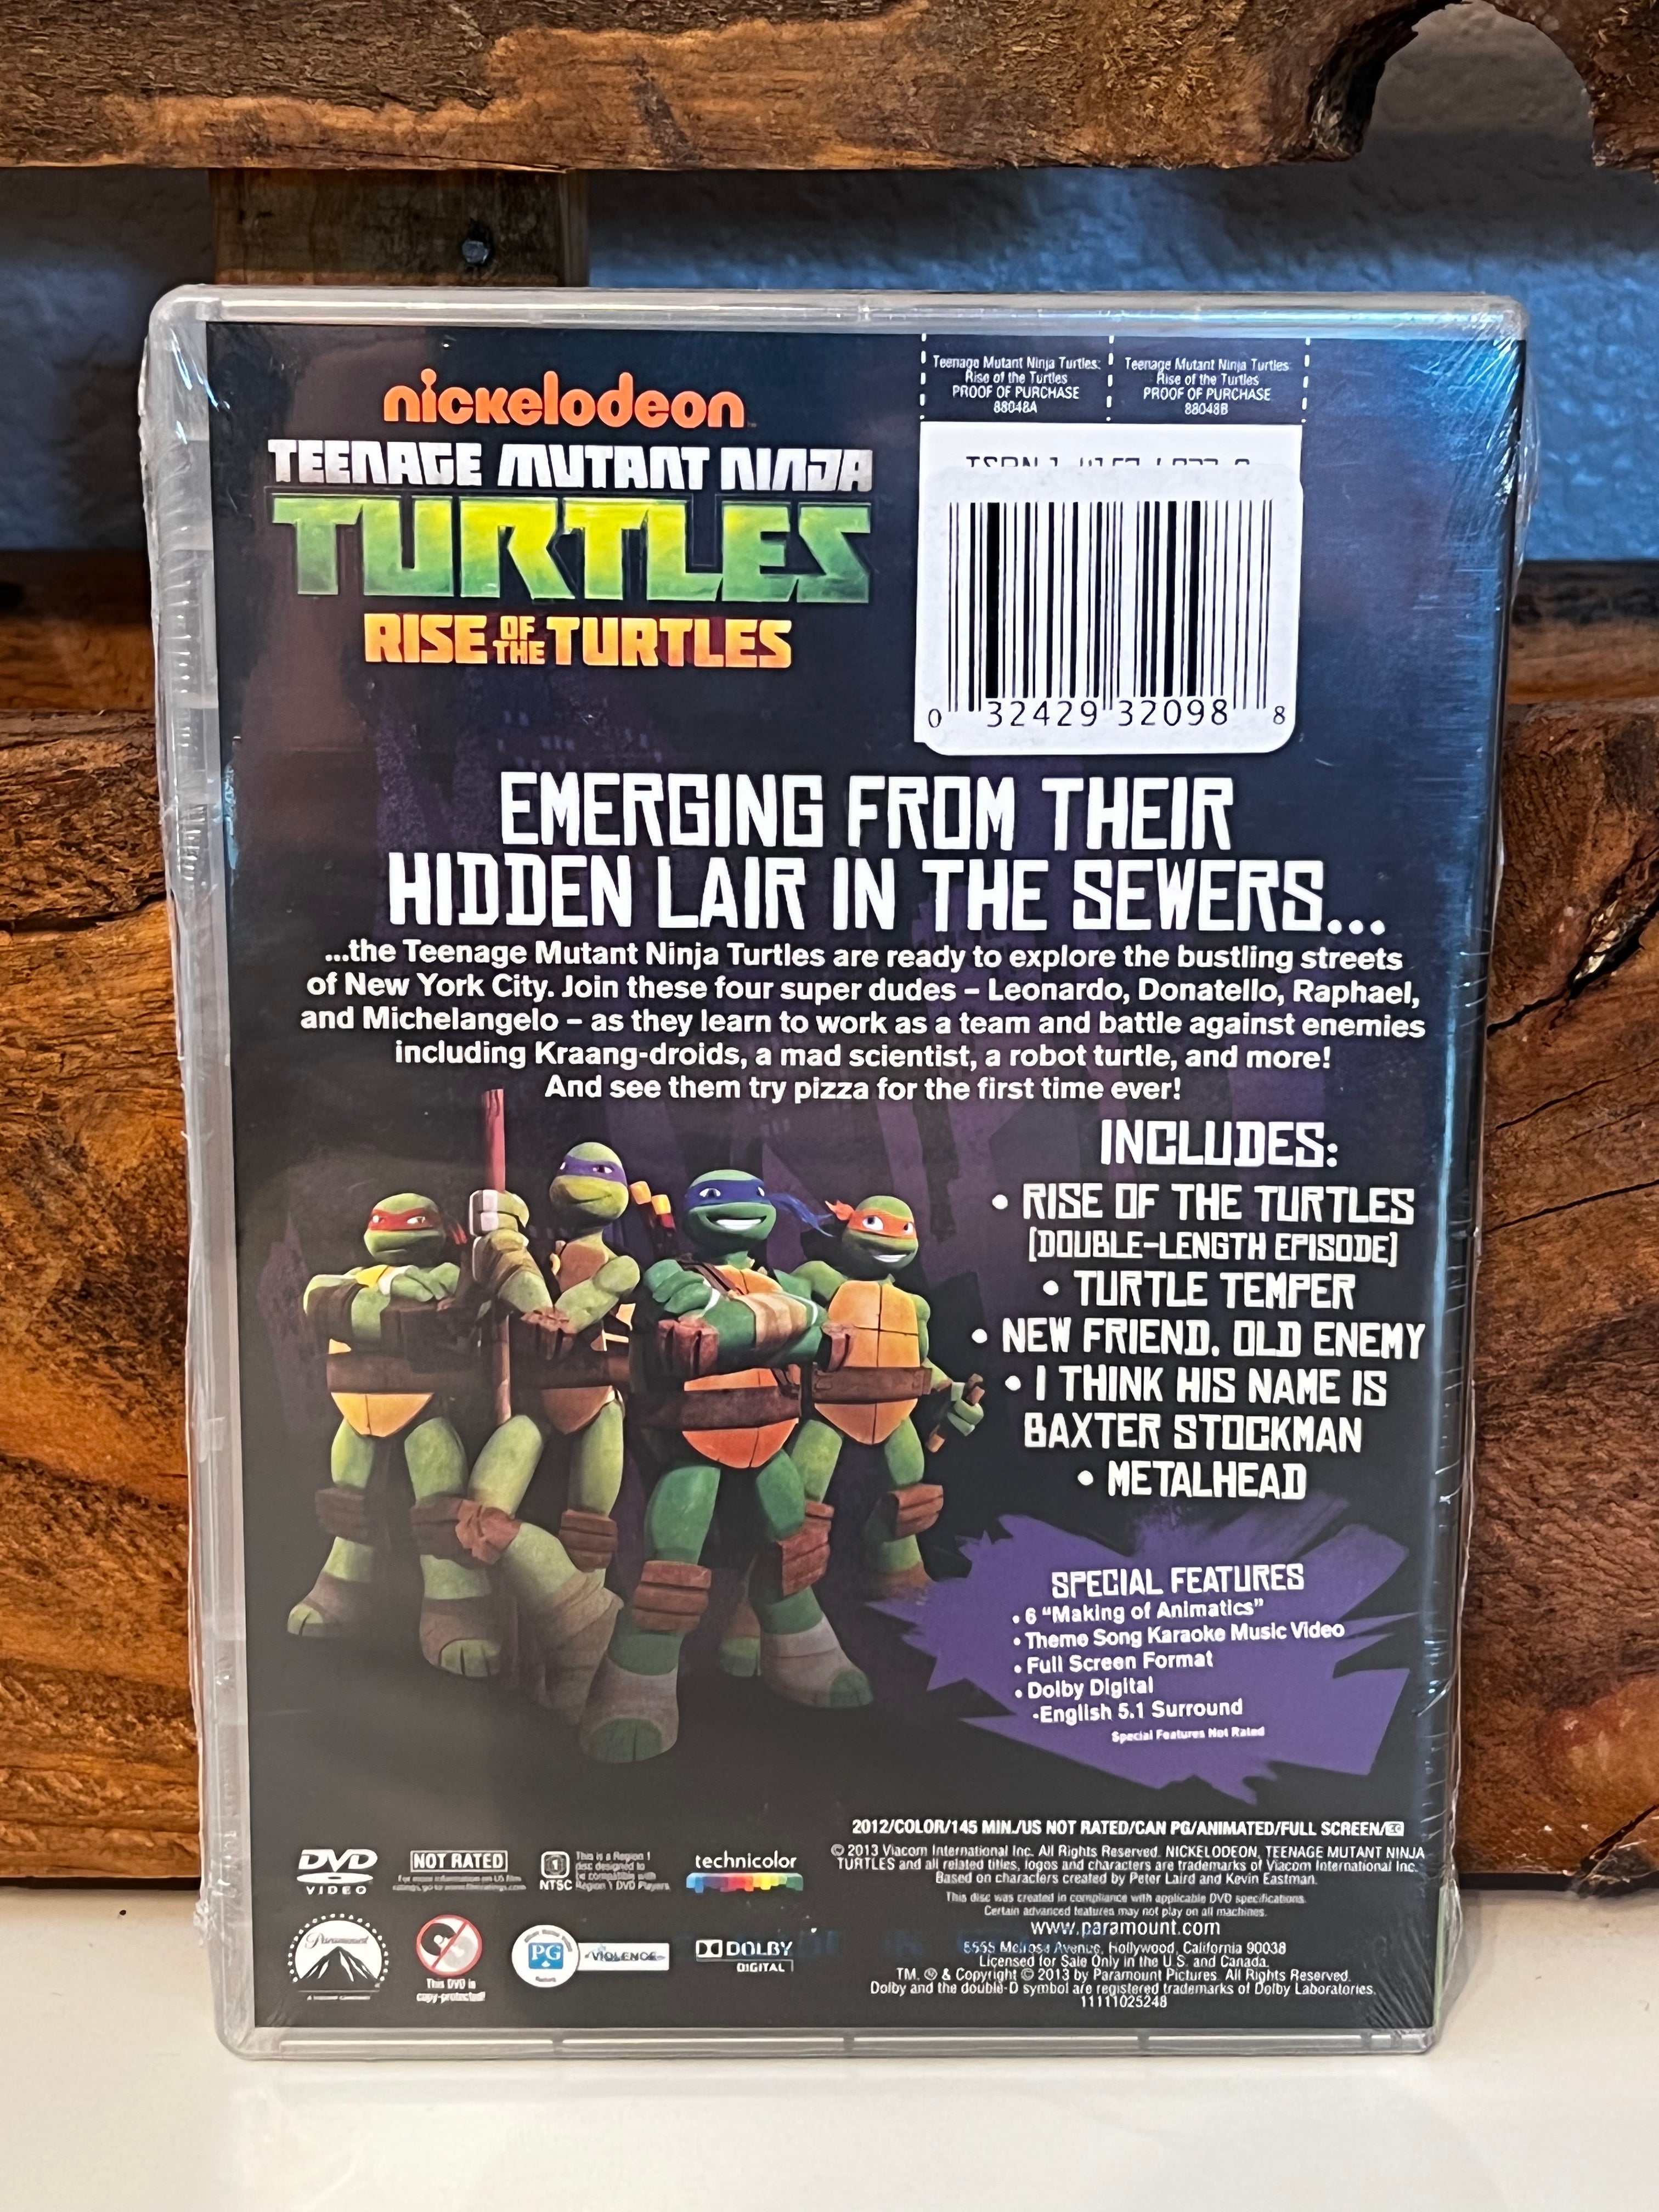 The Toy Box: Nickelodeon Teenage Mutant Ninja Turtles DVD'sOr Which  Order To Watch Them